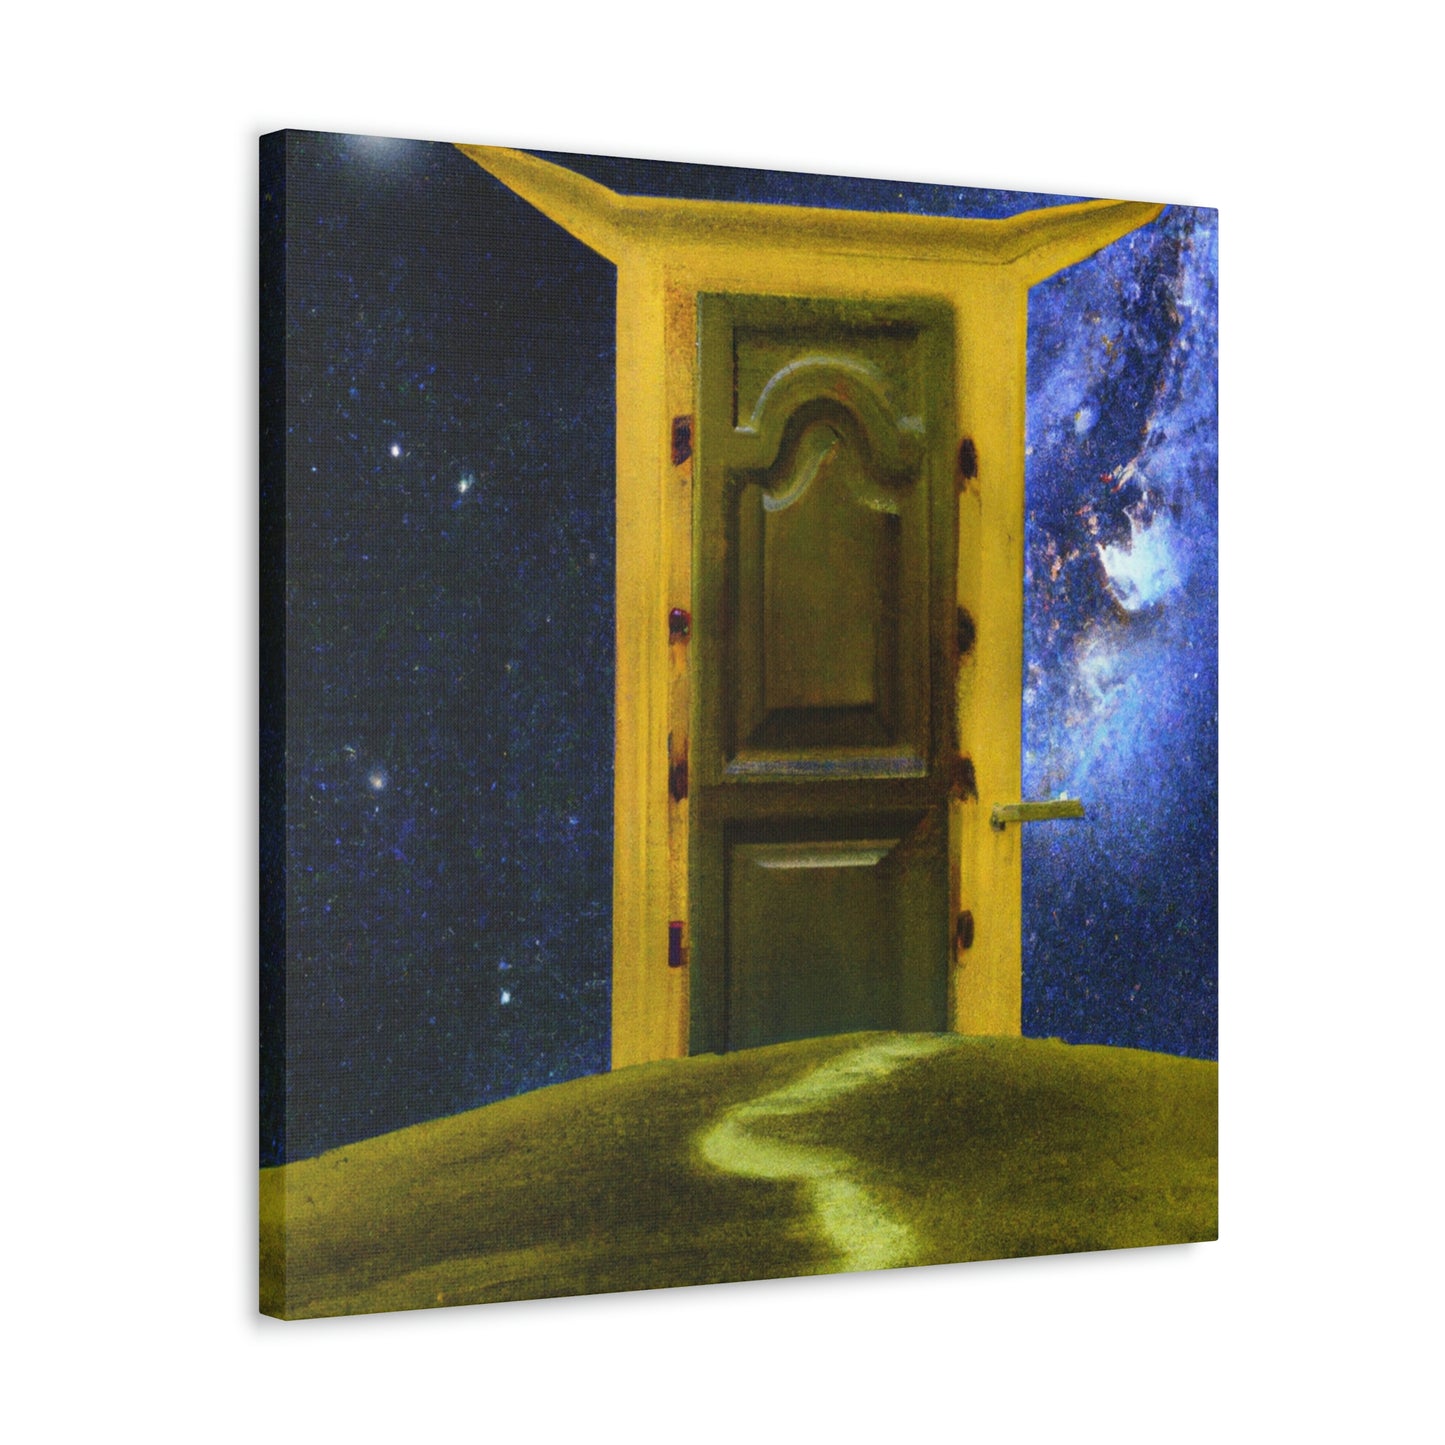 The Heavenly Threshold - The Alien Canva